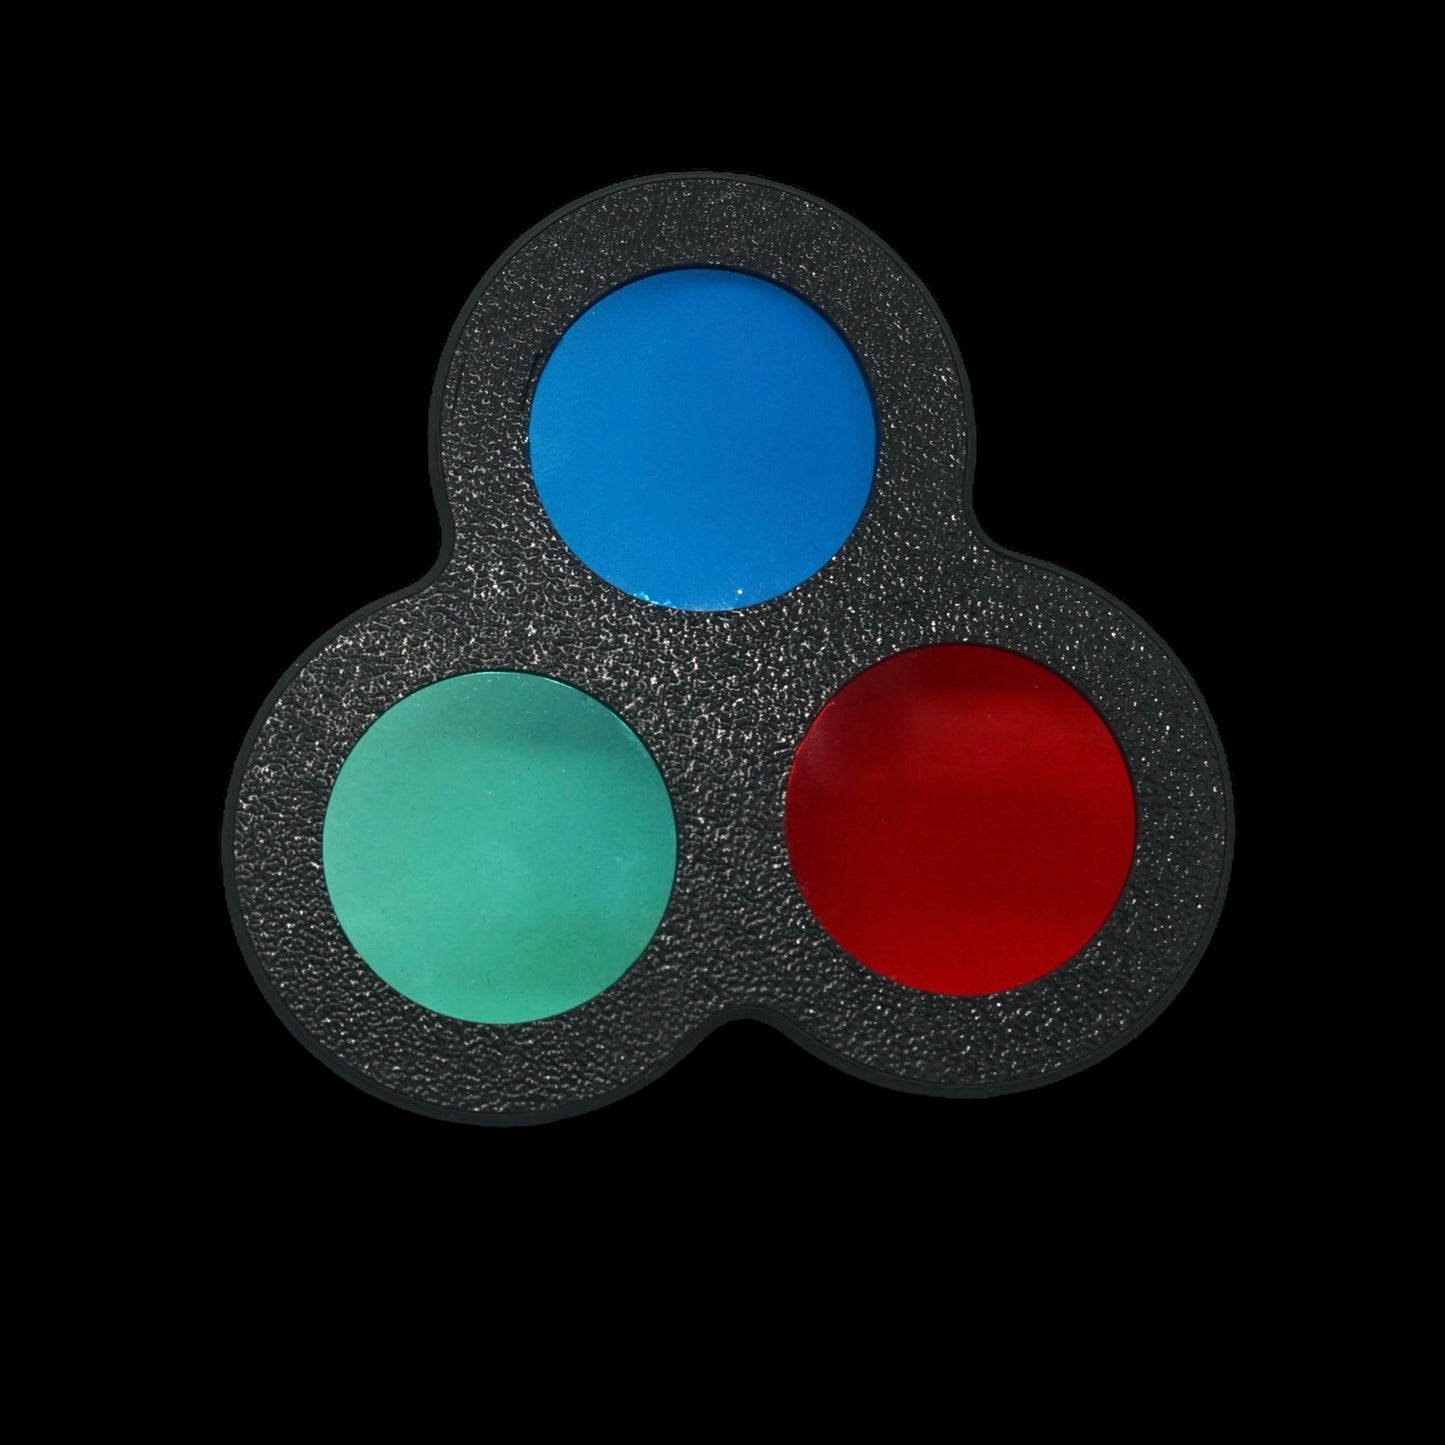 "TriChroma" - Magnetic TriChrome filter adaptor for Cube Pinhole Cameras